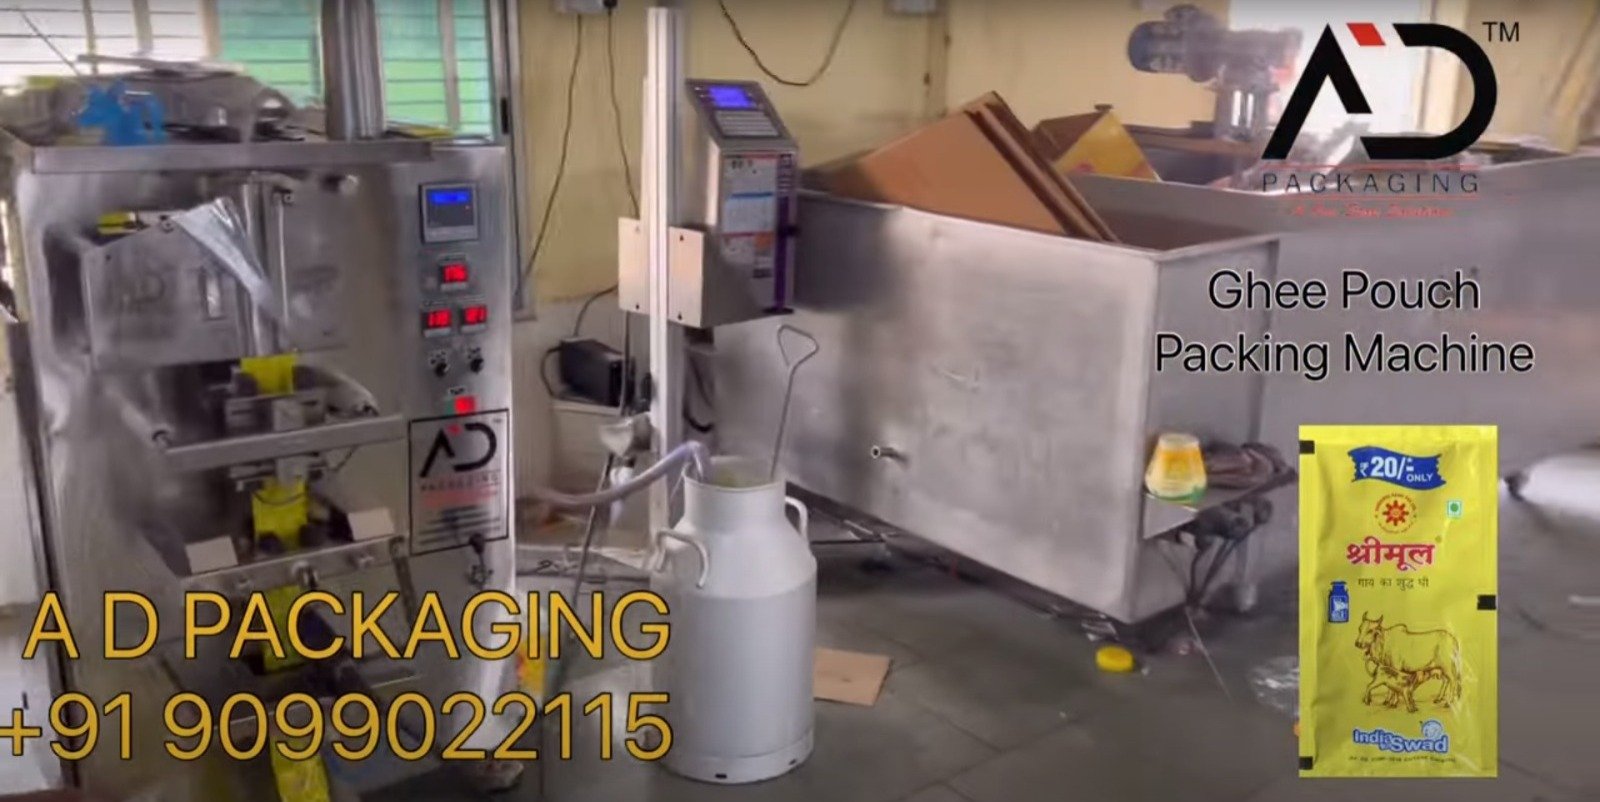 Ghee Pouch Packaging Machine